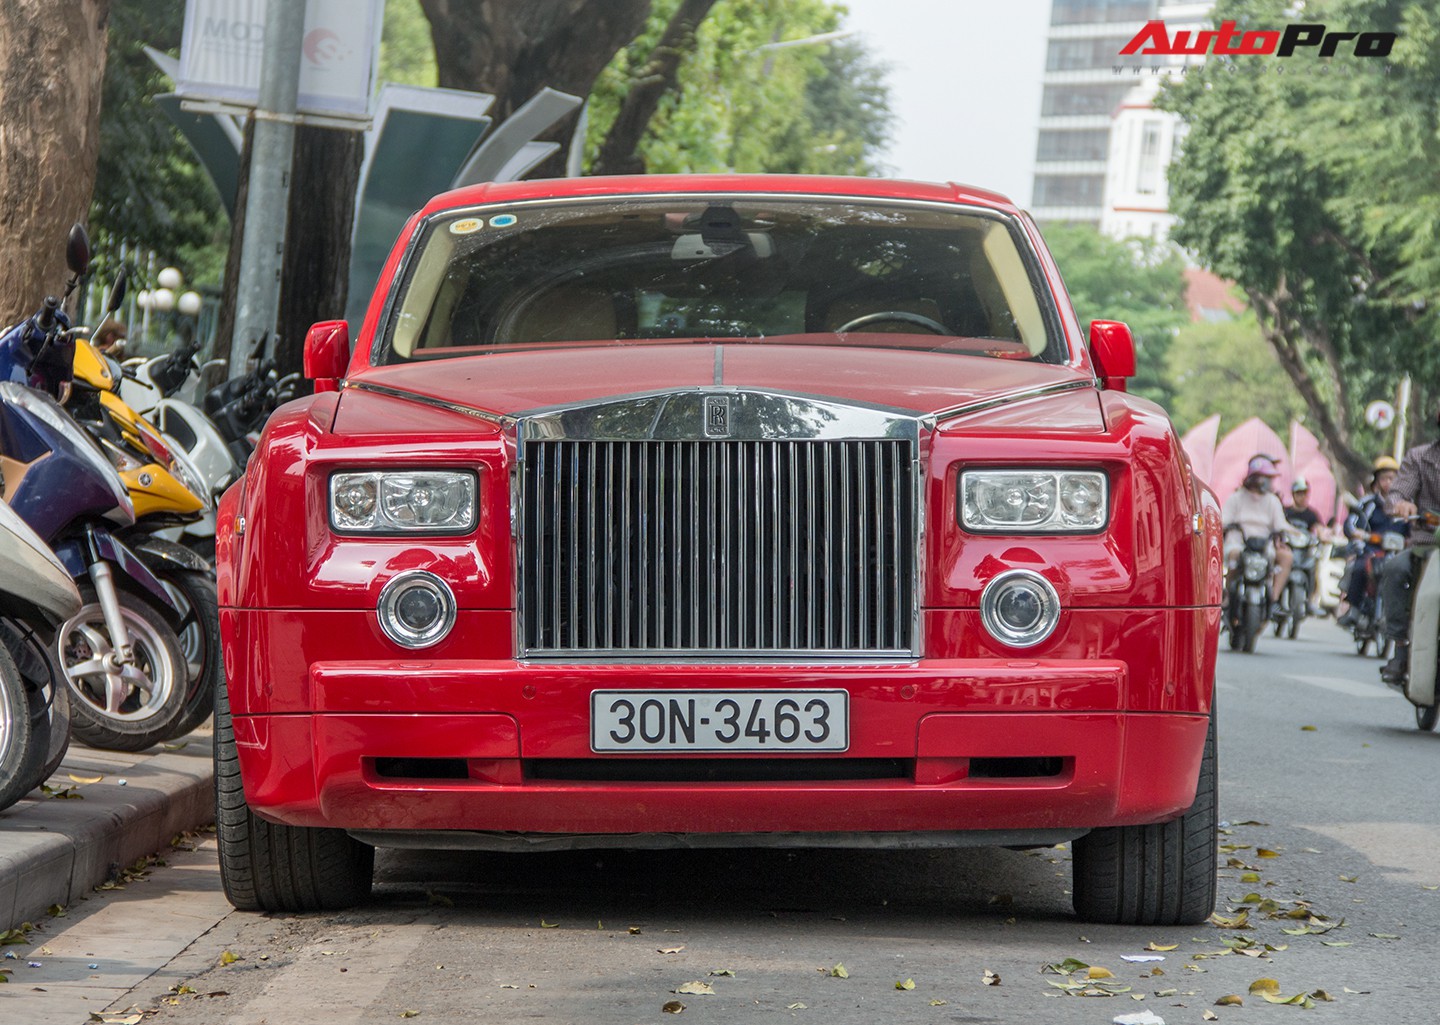 Buy 2005 Rolls Royce Phantom from Europe at 119900  in Ukraine  PLC Group